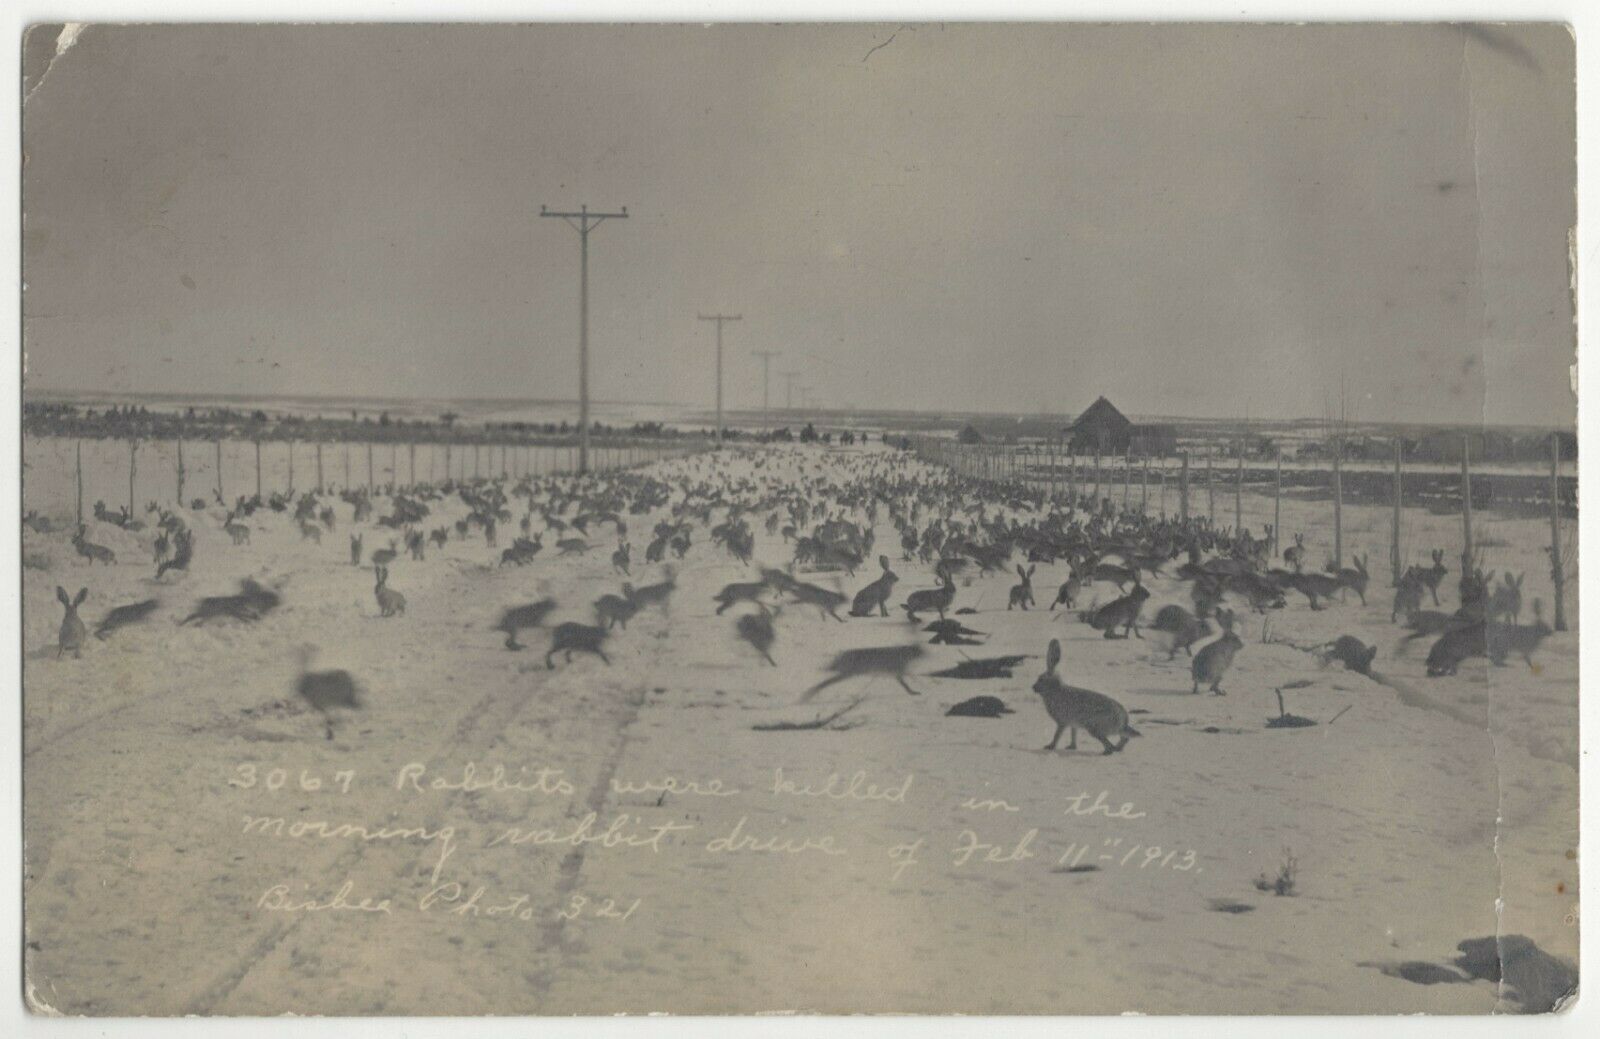 1913 Burley, Idaho - REAL PHOTO Rabbit Drive, 3,067 Killed, Vintage Postcard